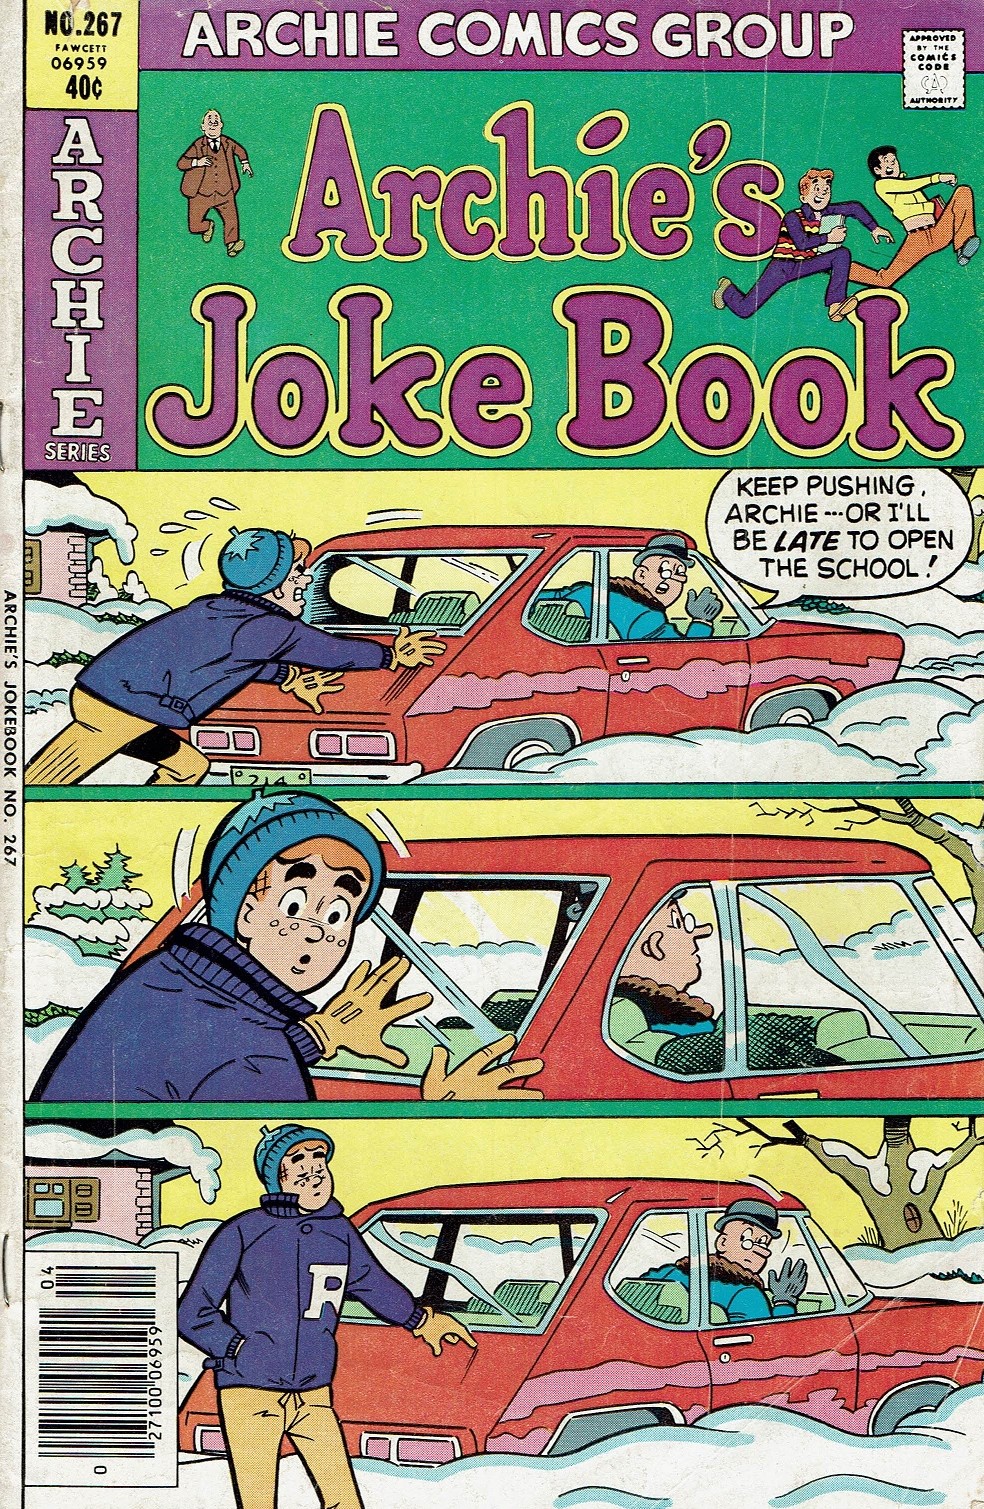 Archie's Joke Book Magazine issue 267 - Page 1